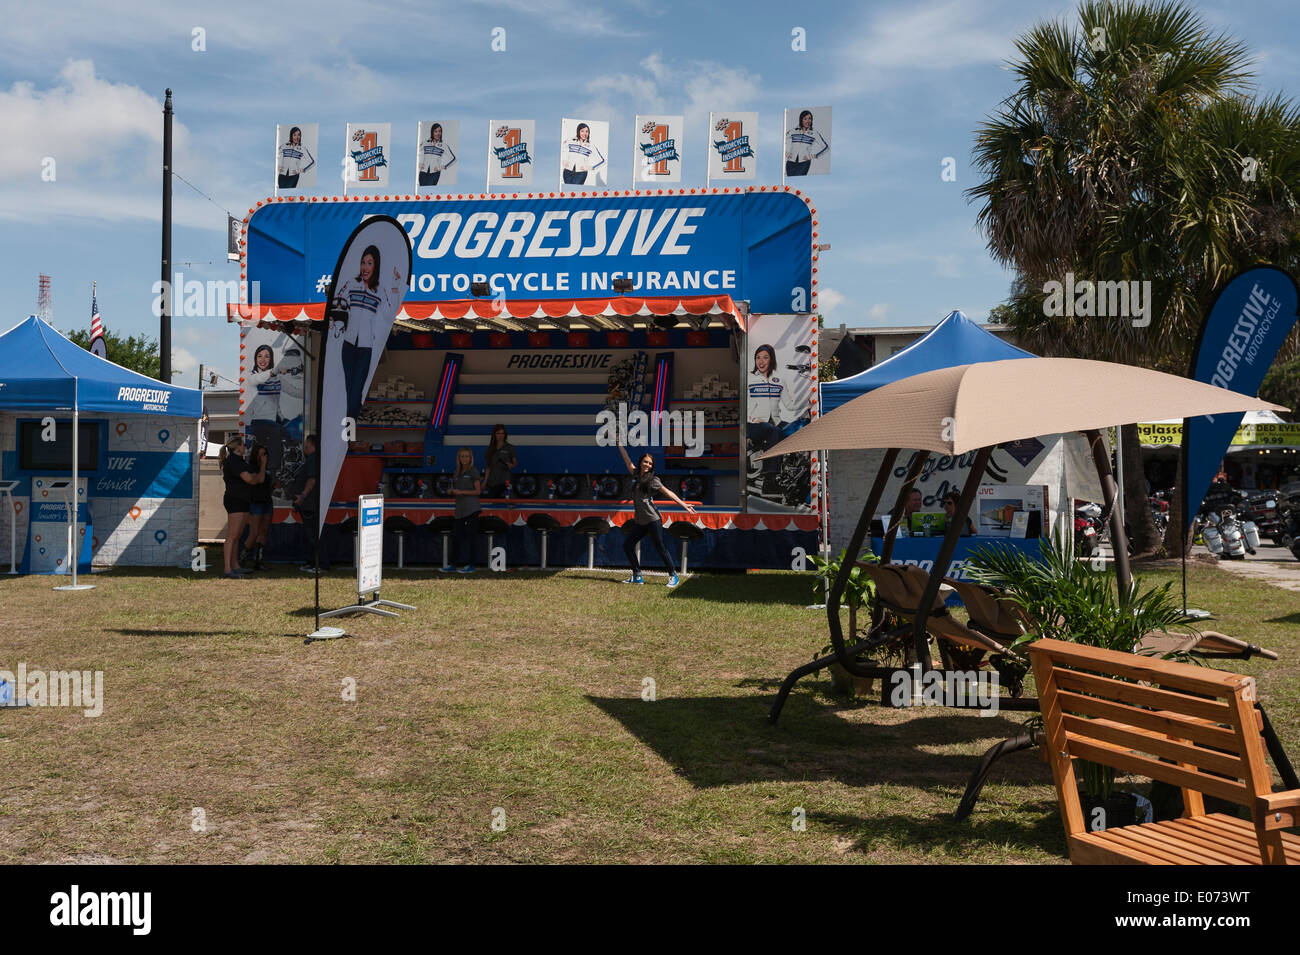 Progressive Motorcycle Insurance Setup At The 2014 Leesburg Bikefest Event In Florida Usa Stock Photo Alamy